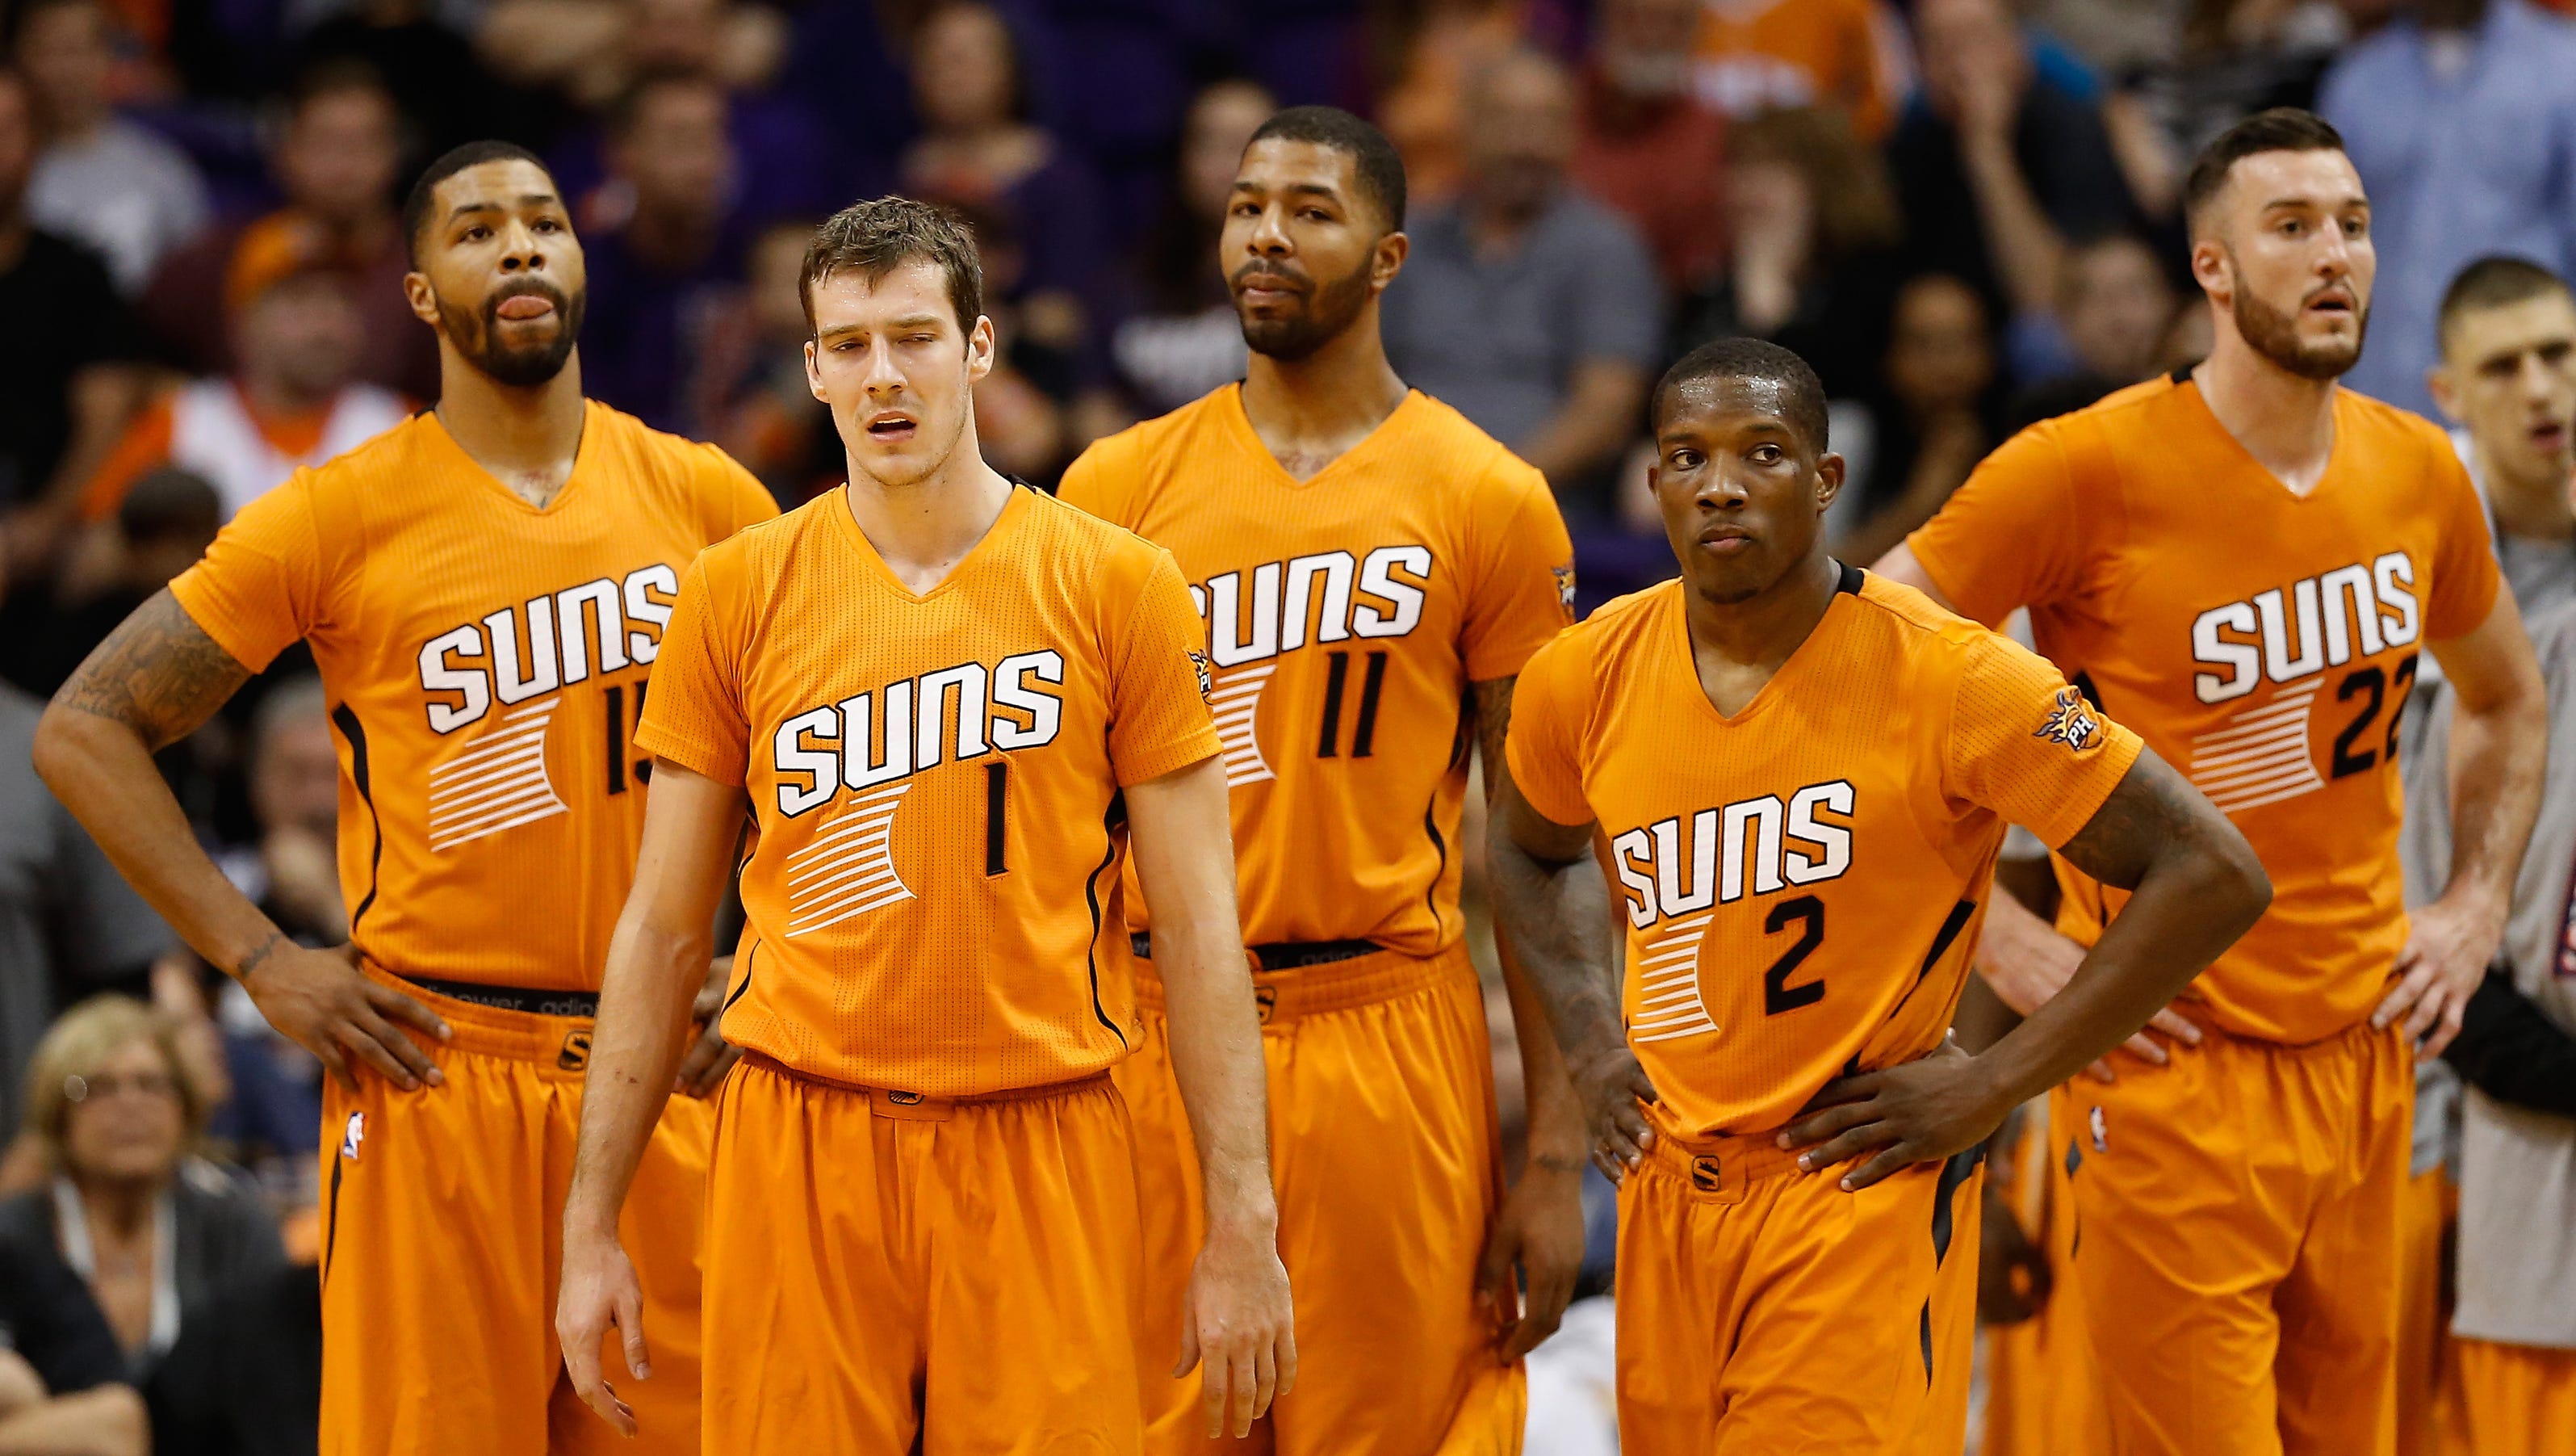 Men's Basketball Throwback Uniforms Are a Slam Dunk · News